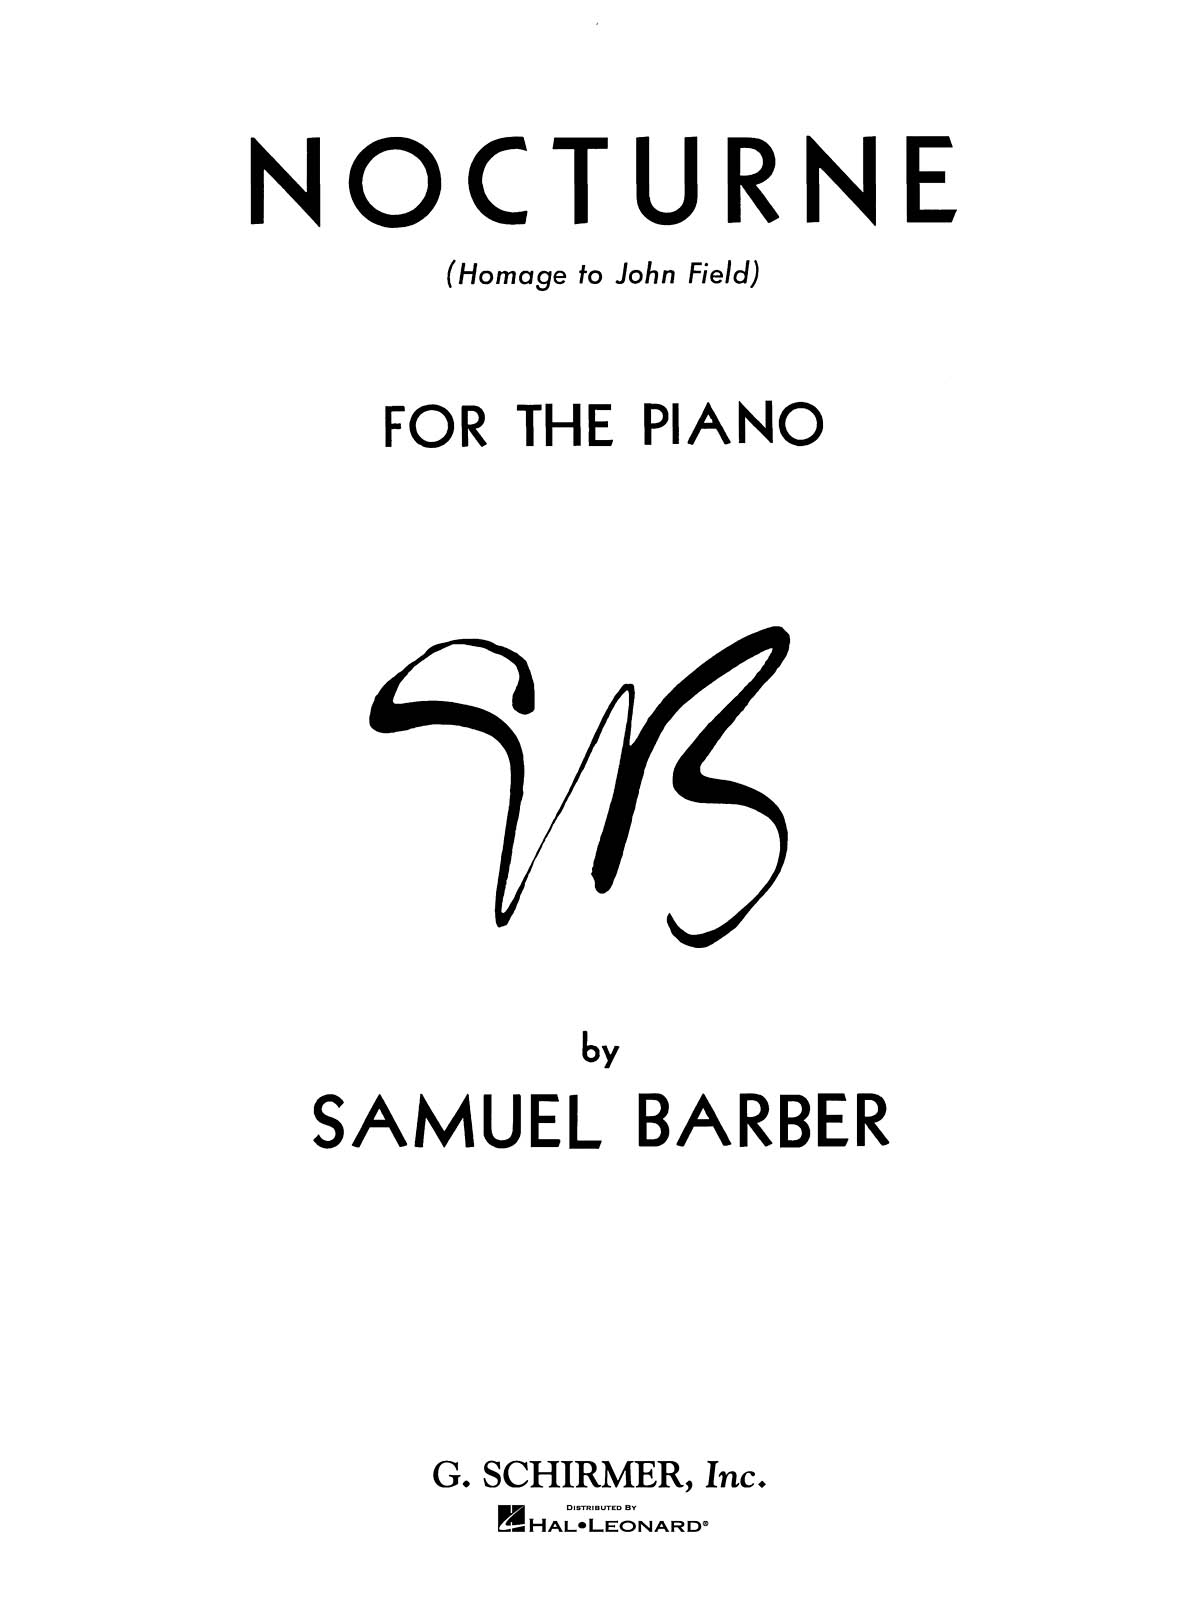 Samuel Barber: Nocturne Op. 33 – Homage to John Fields